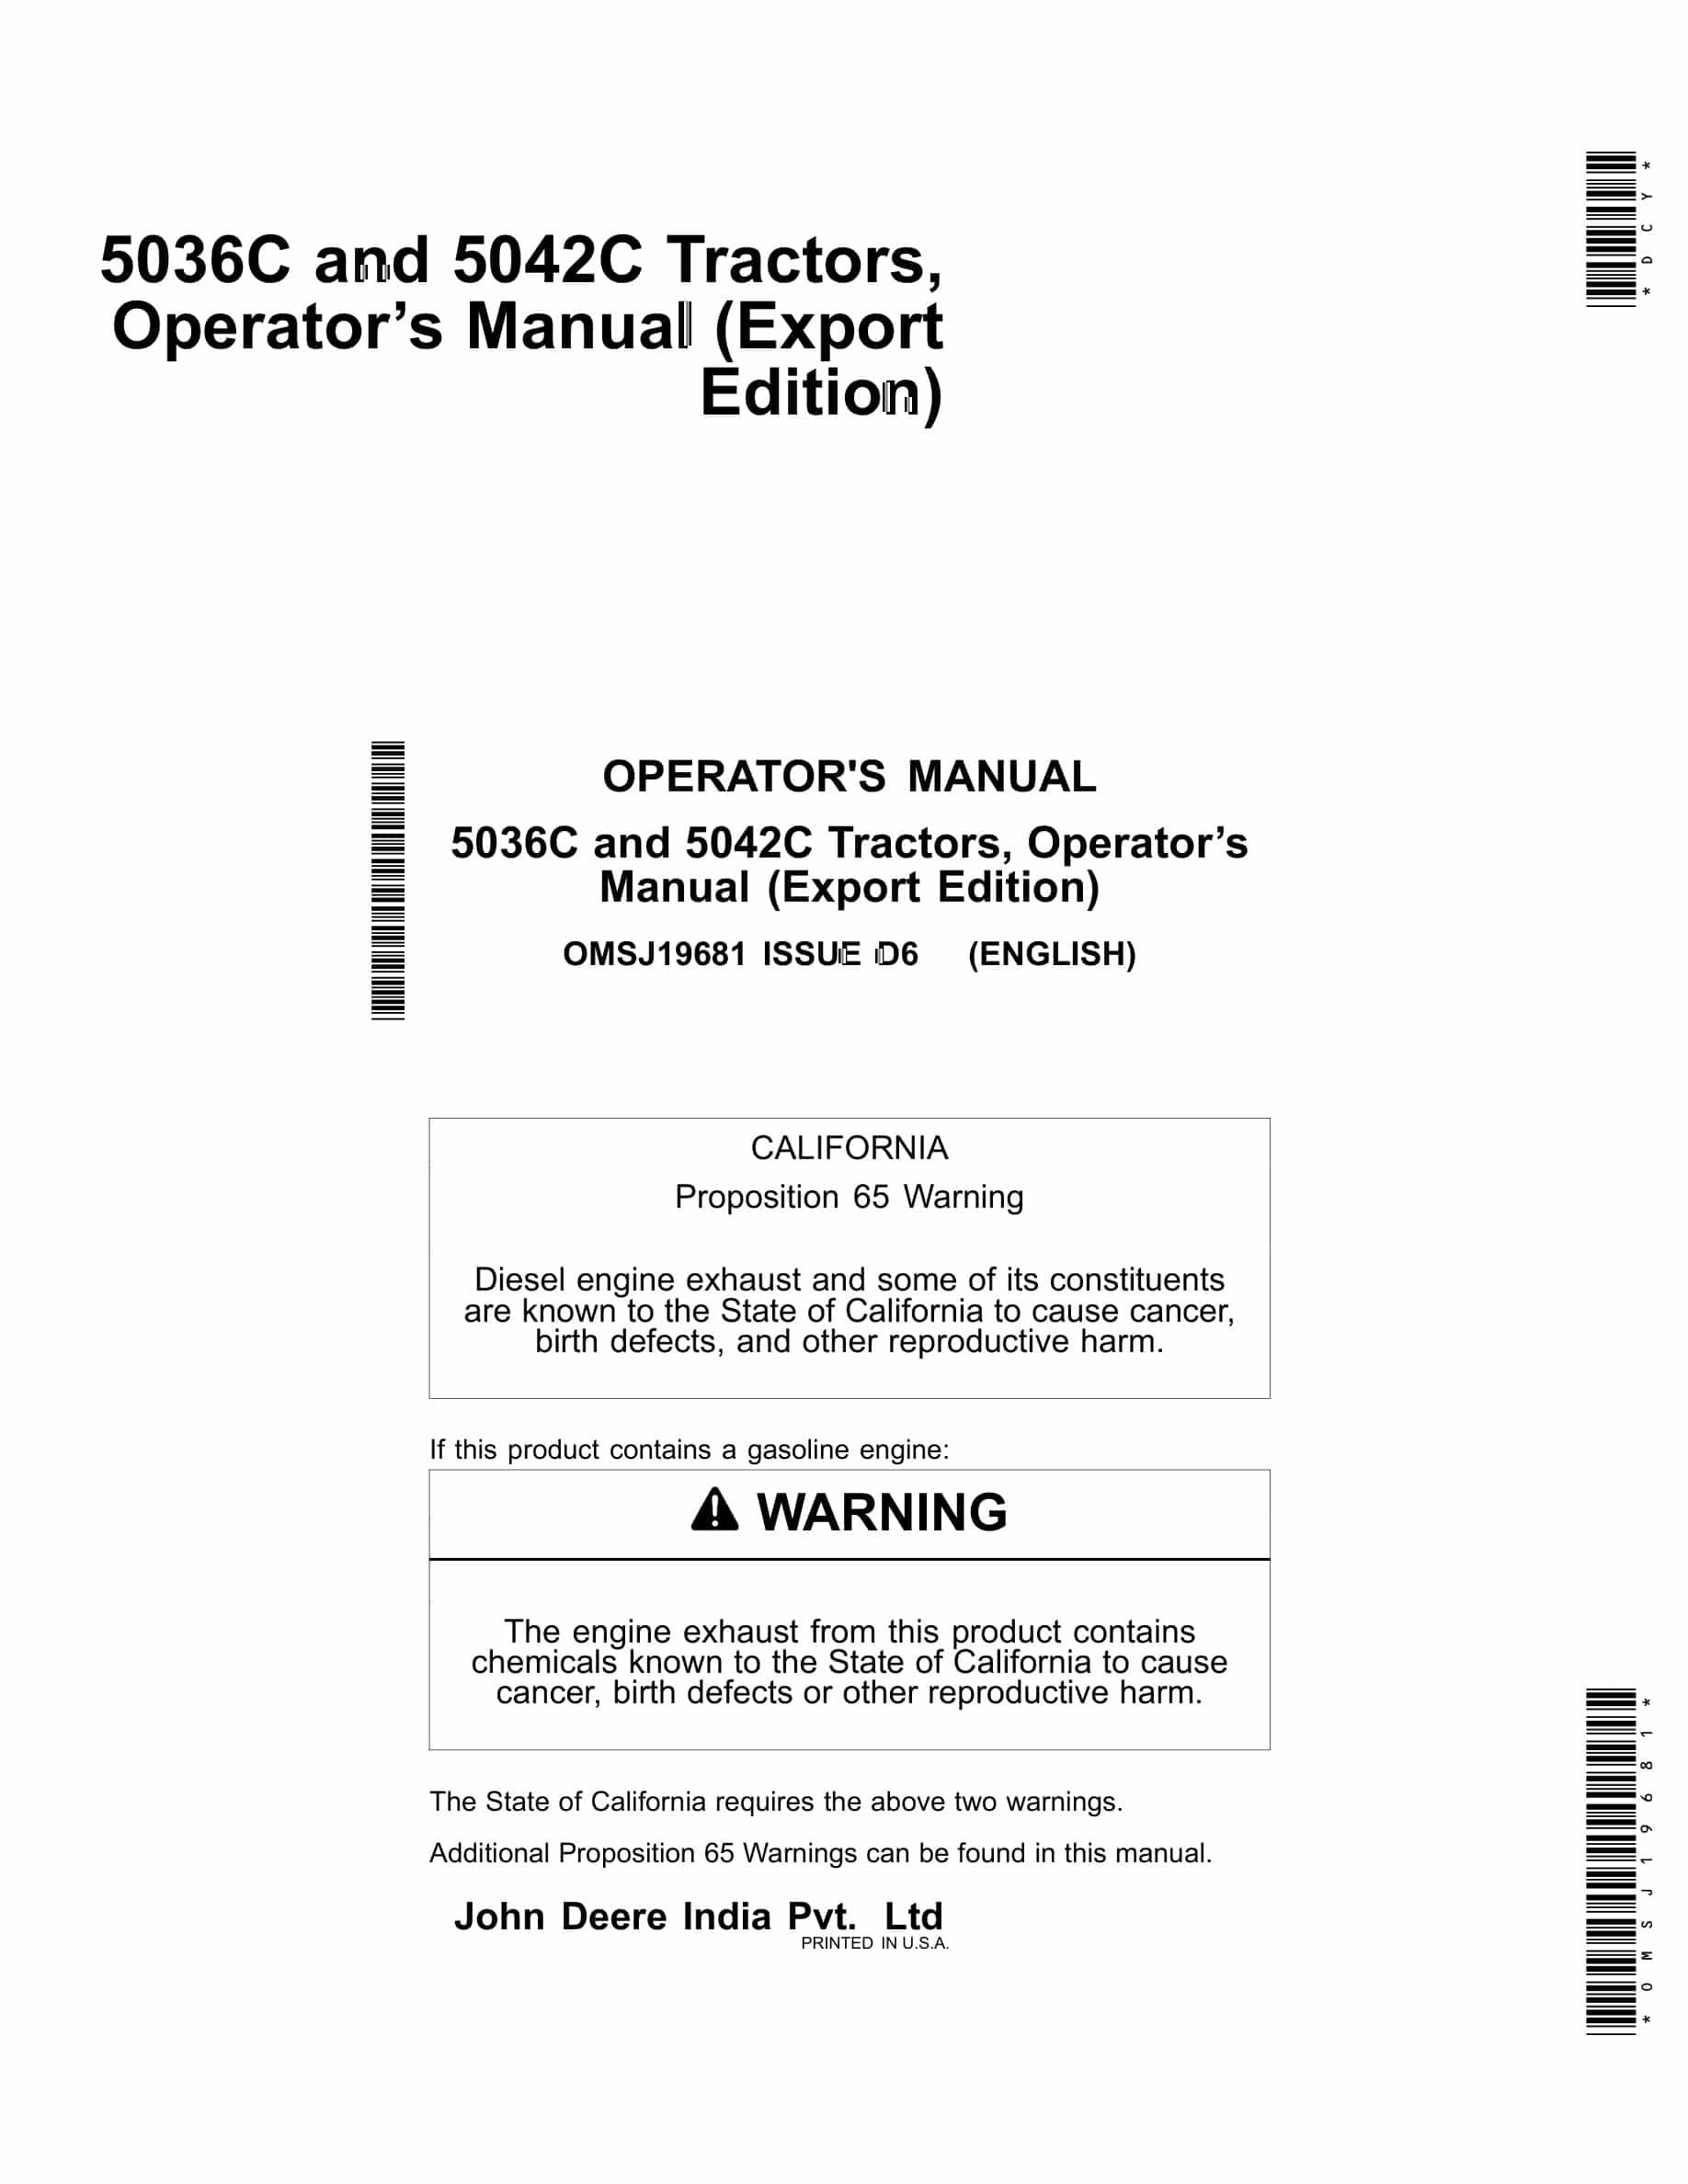 John Deere 5036c And 5042c Tractors Operator Manuals OMSJ19681-1